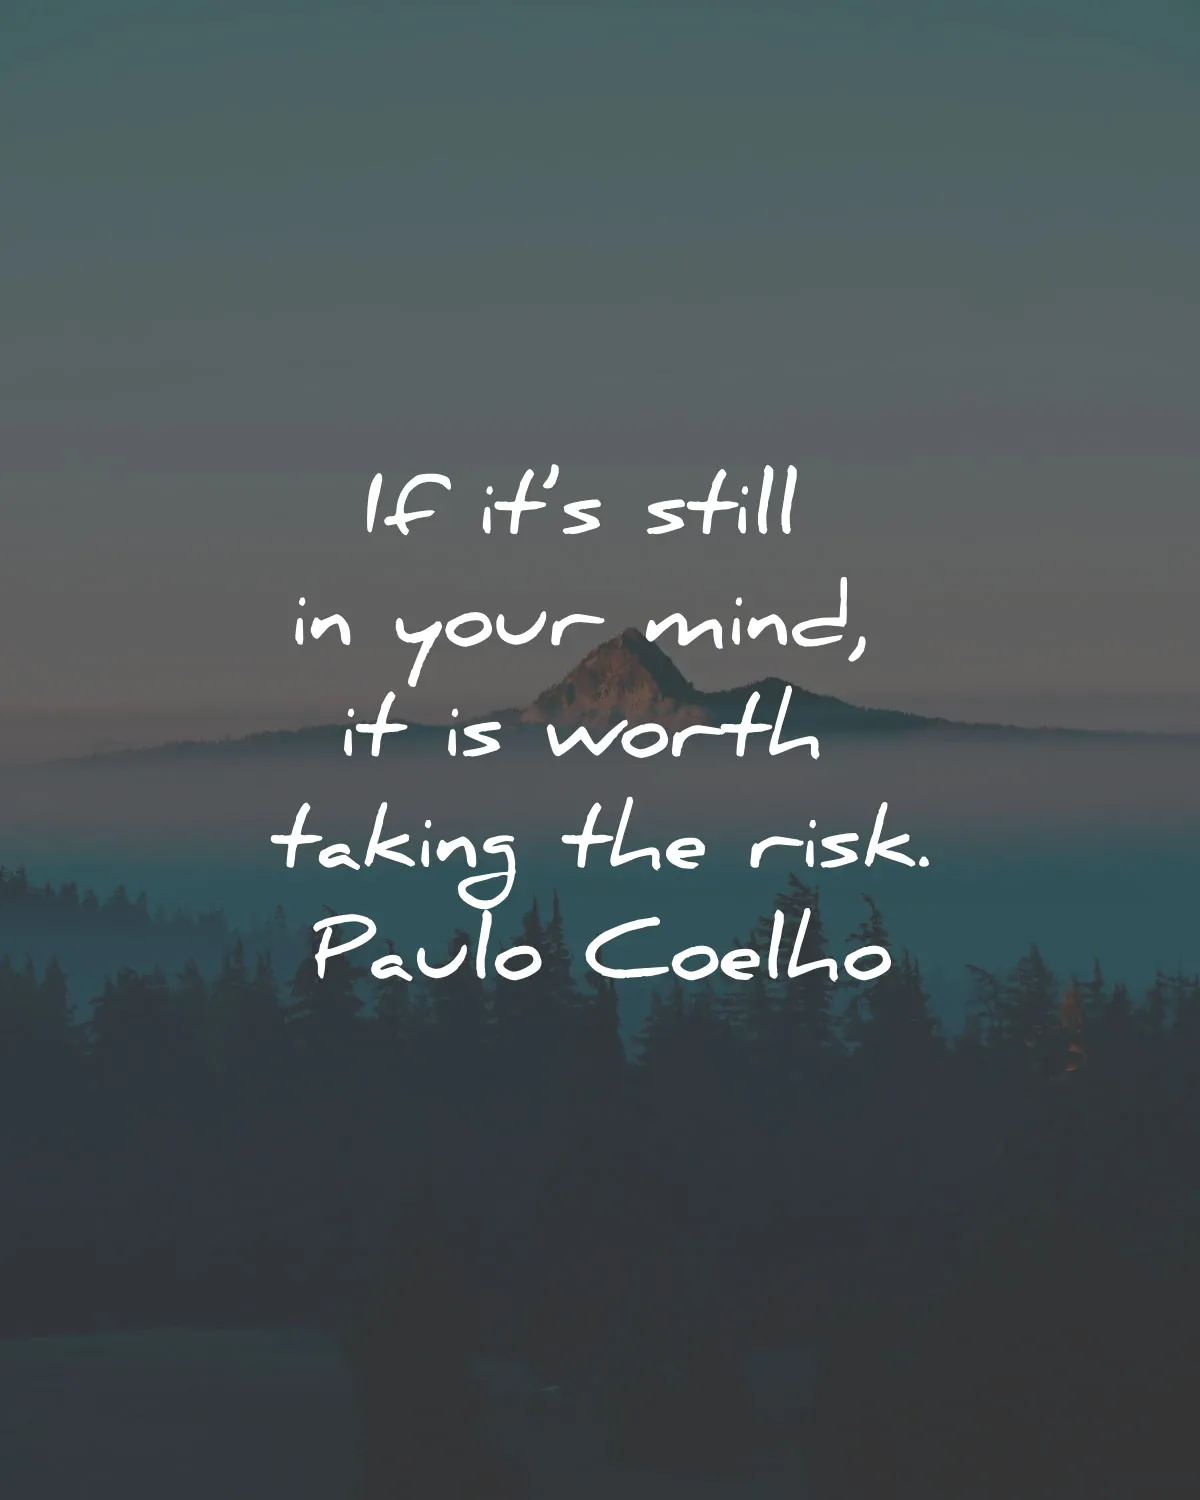 the alchemist quotes paulo coelho still your mind worth risk wisdom